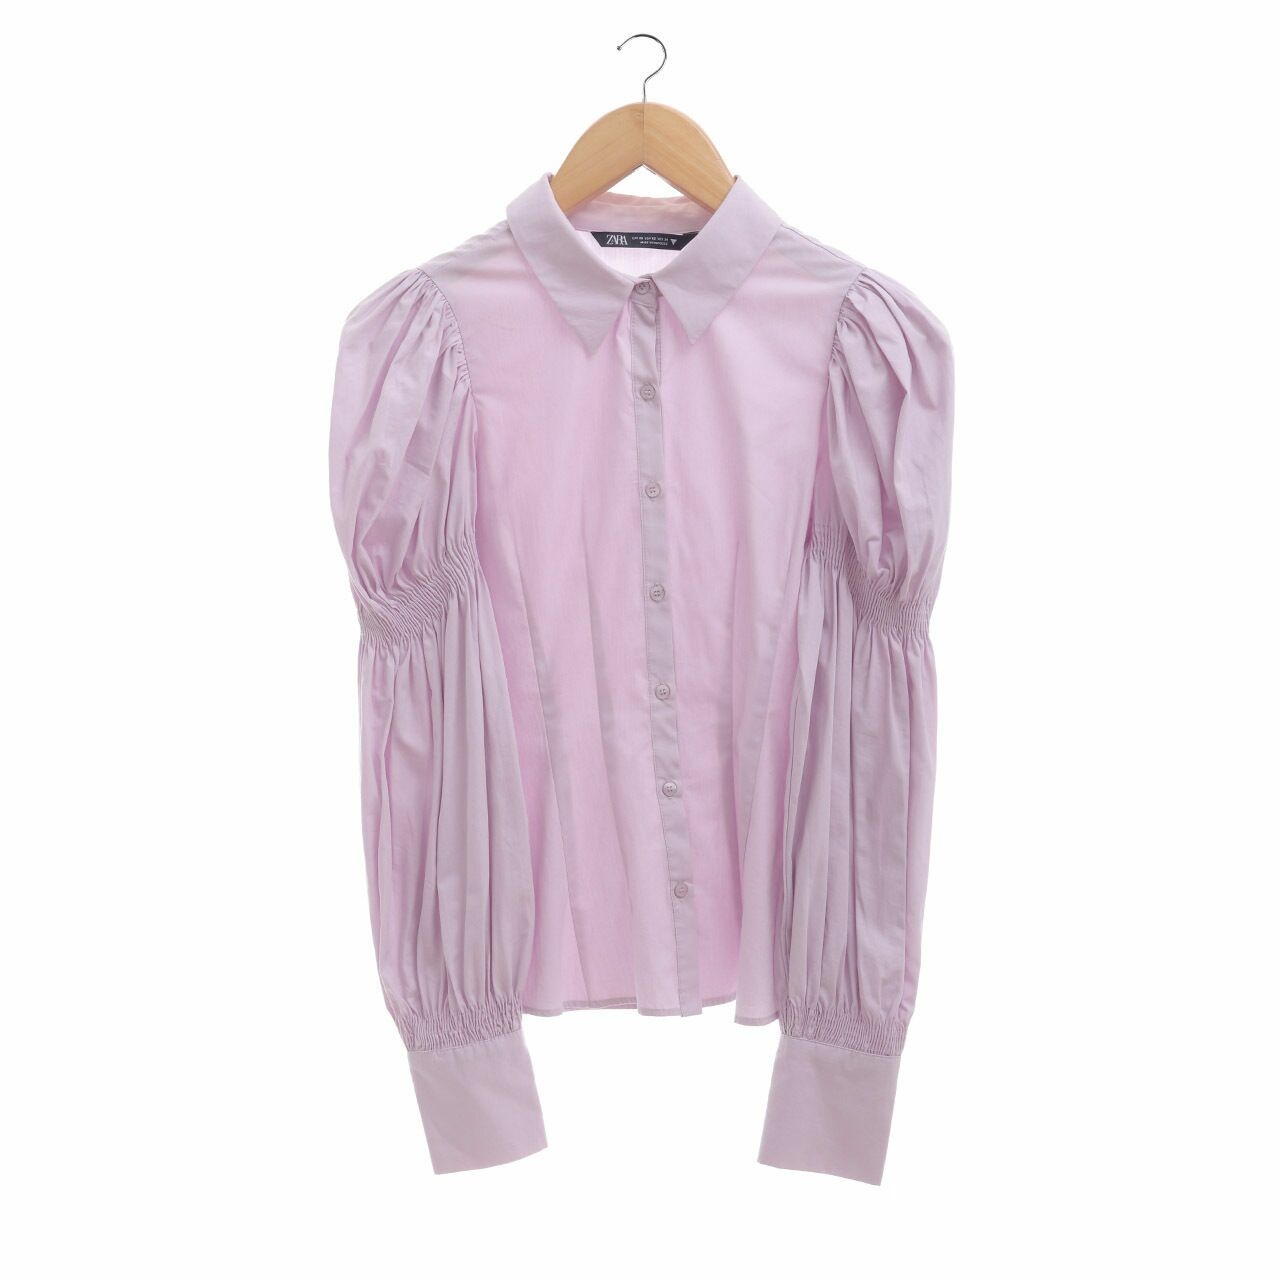 Zara Lilac Shirt